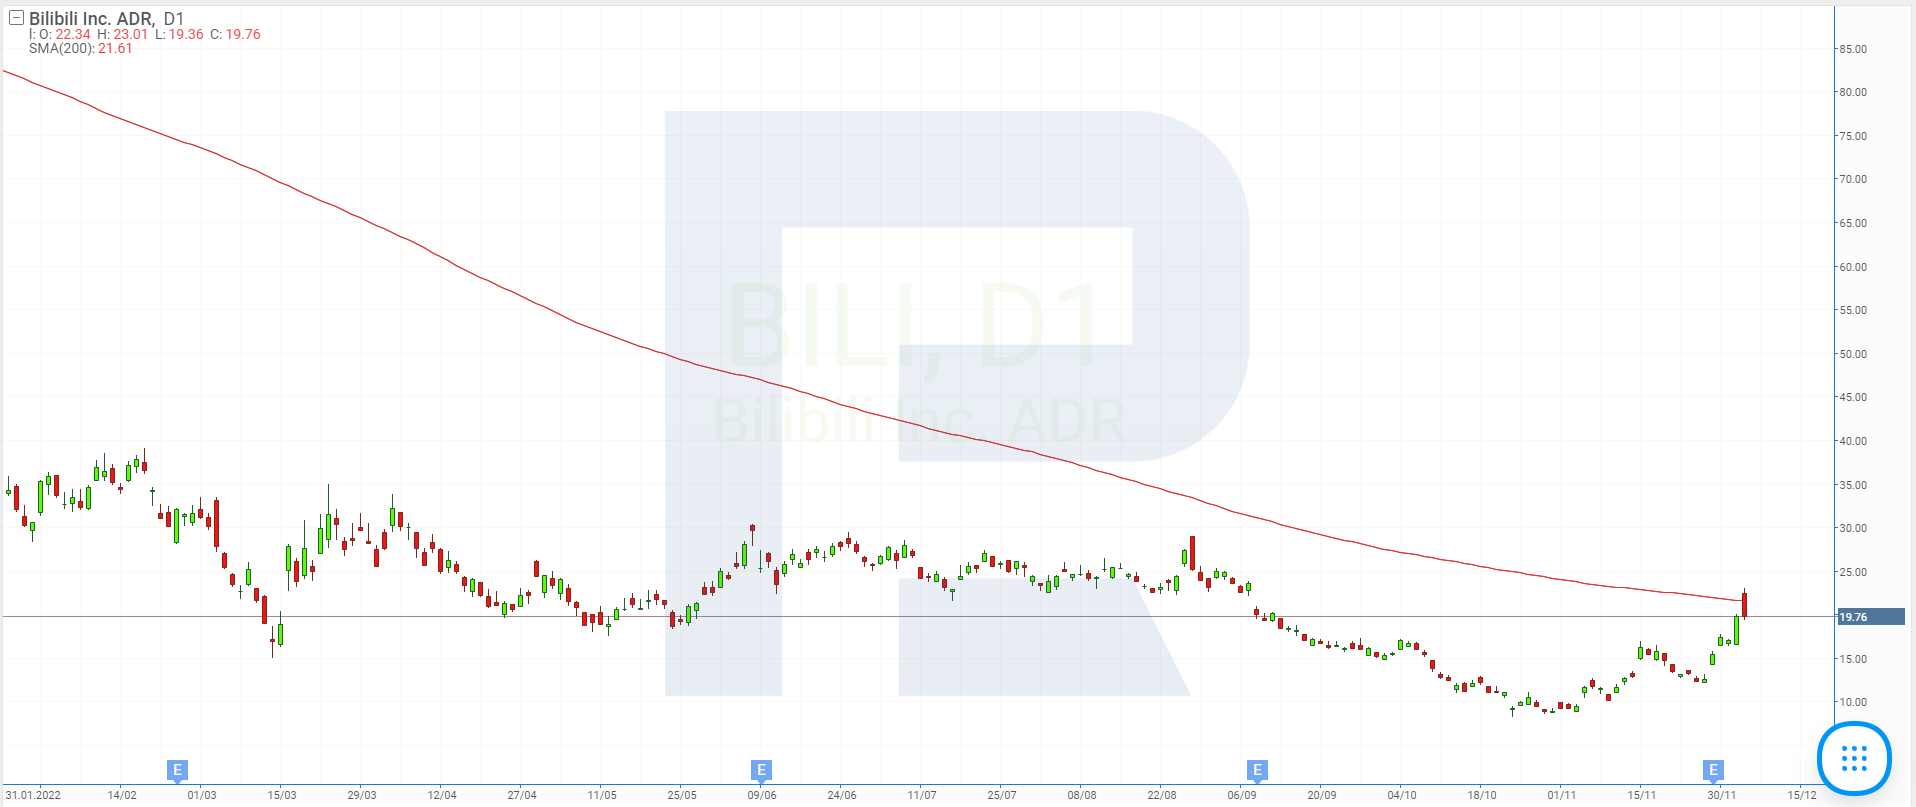 Stock price charts of Bilibili